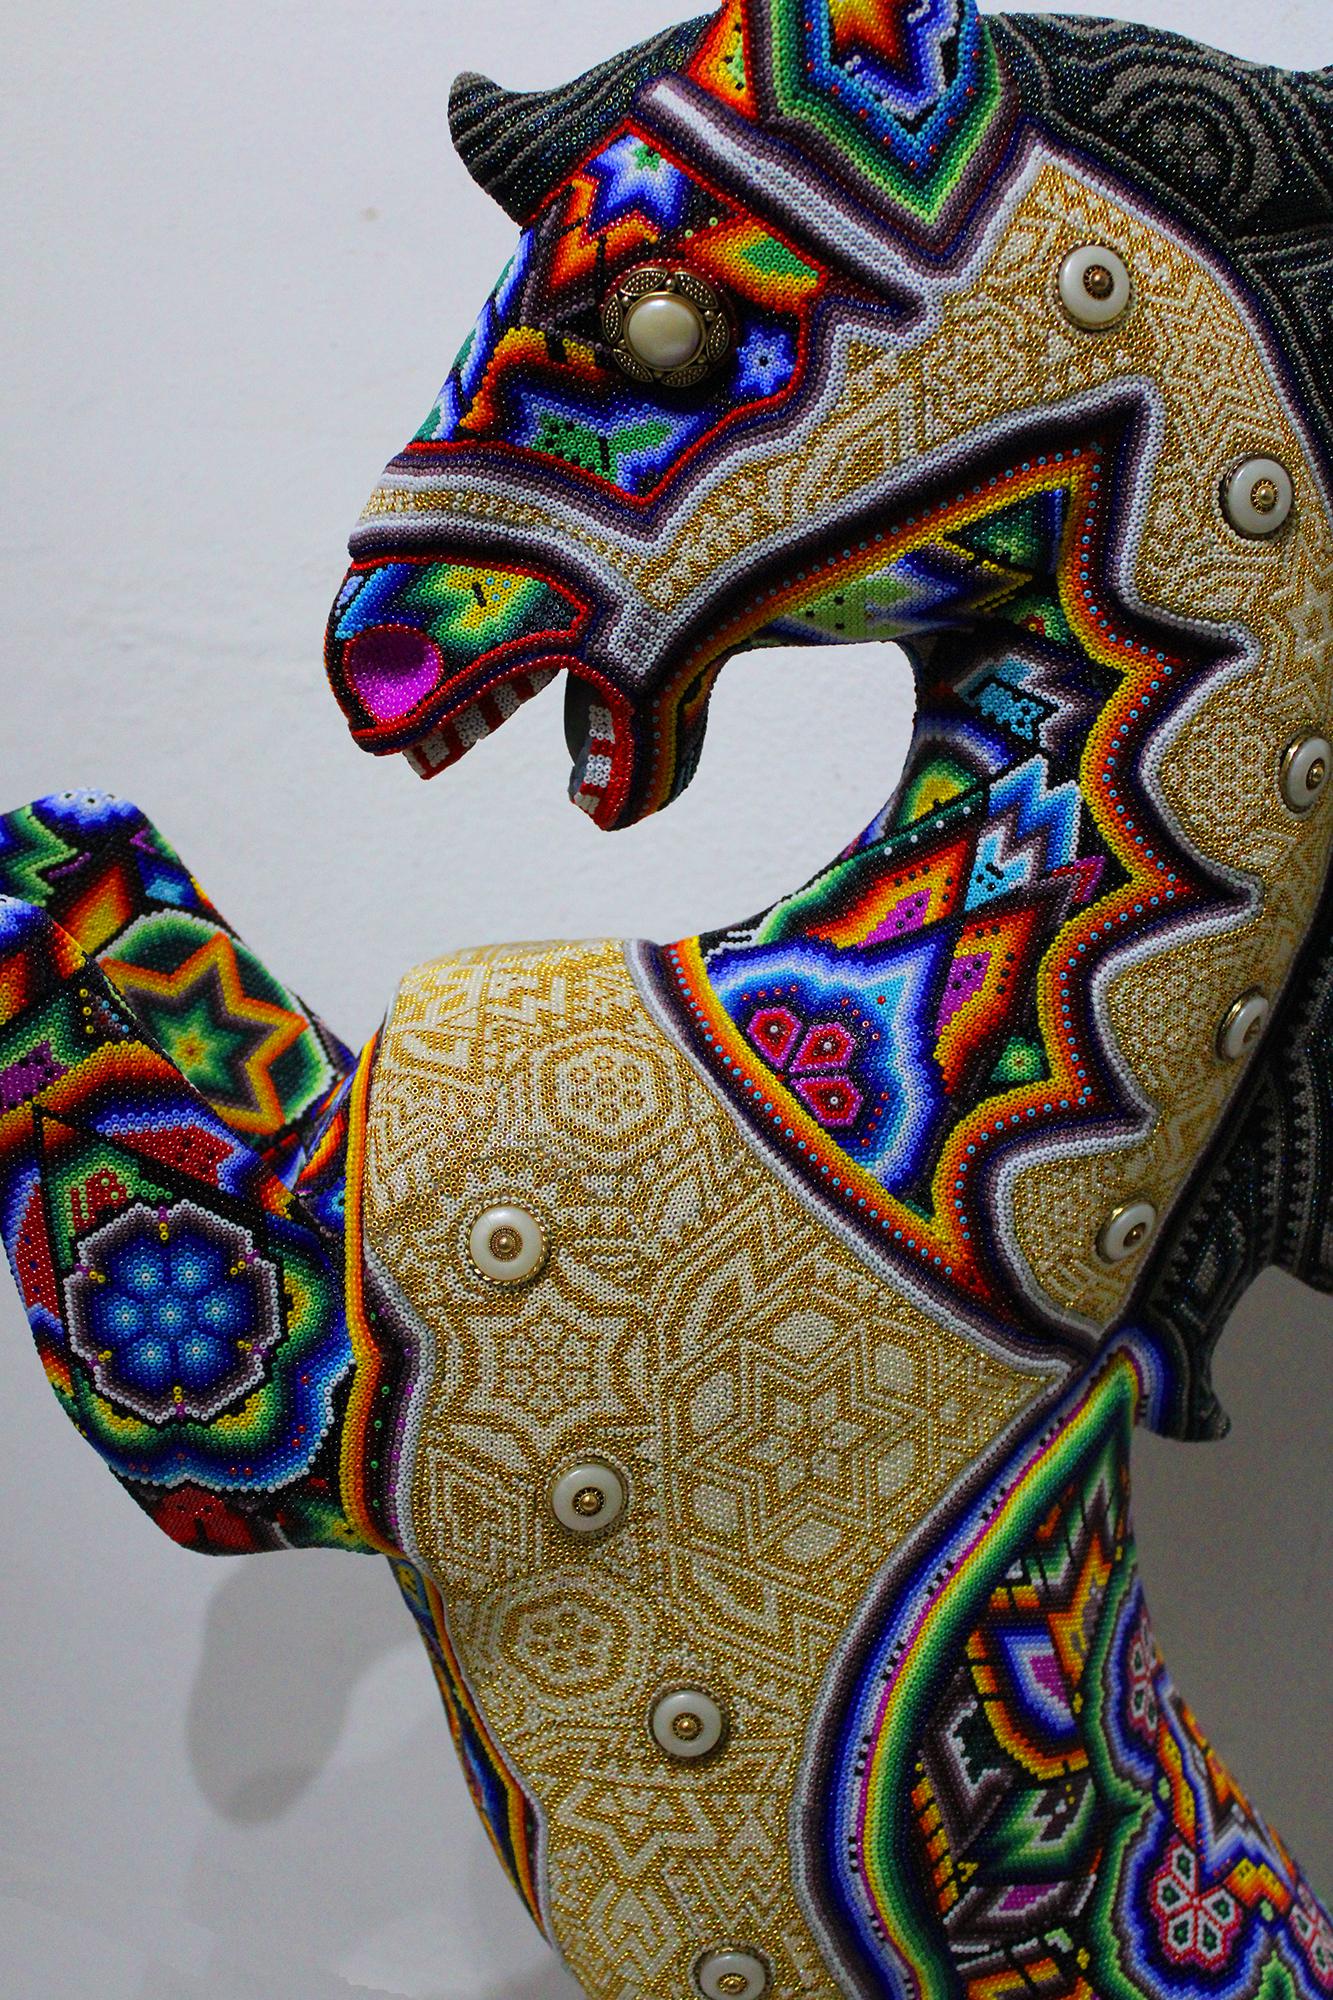 CHROMA aka Rick Wolfryd  Figurative Sculpture - "WONDER HORSE" Carousel Series from Huichol Alterations